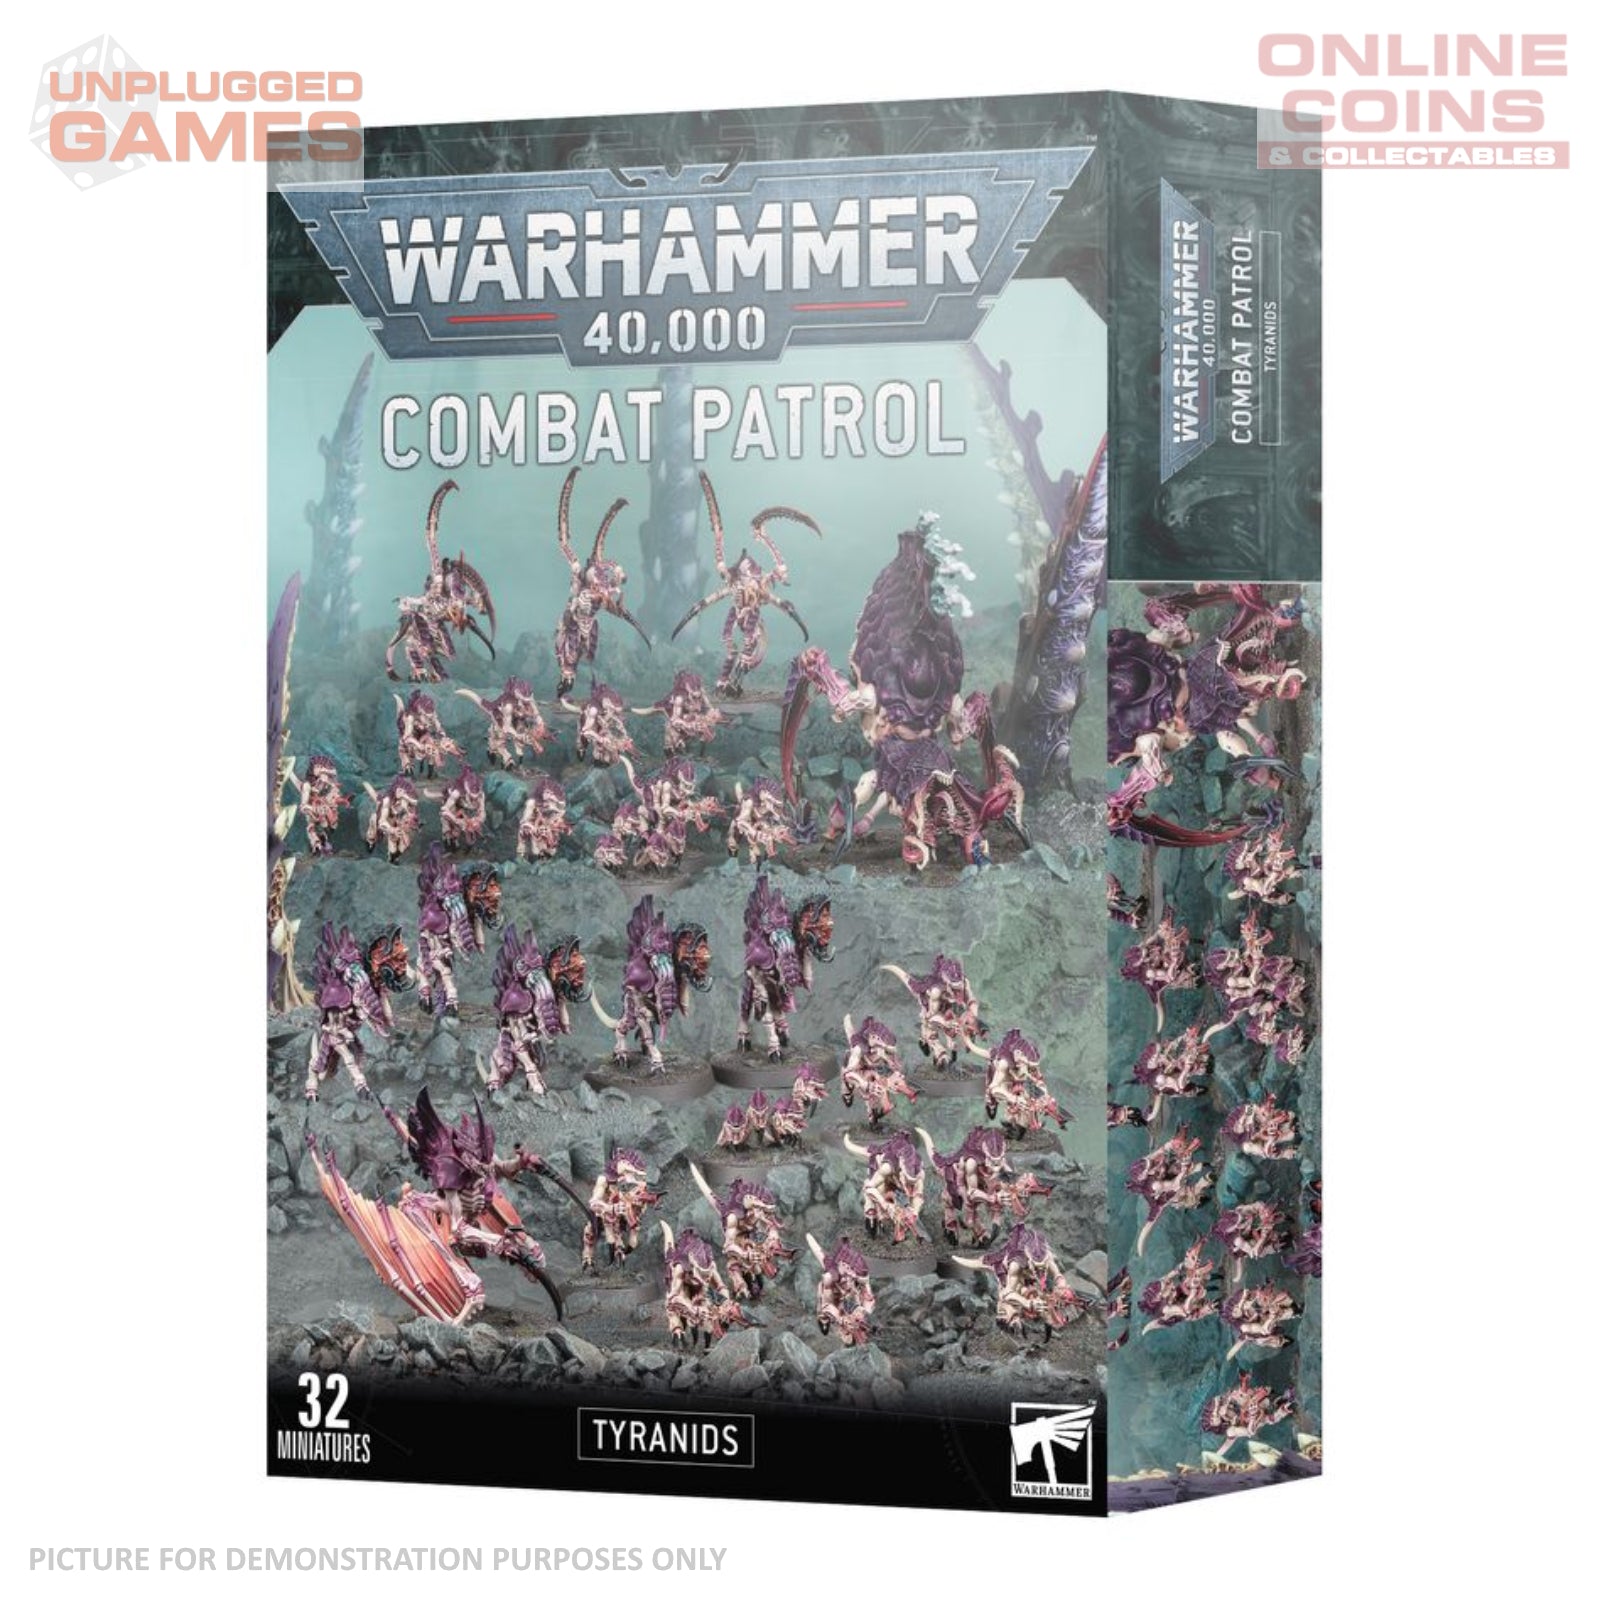 Warhammer 40,000 - Combat Patrol Tyranids